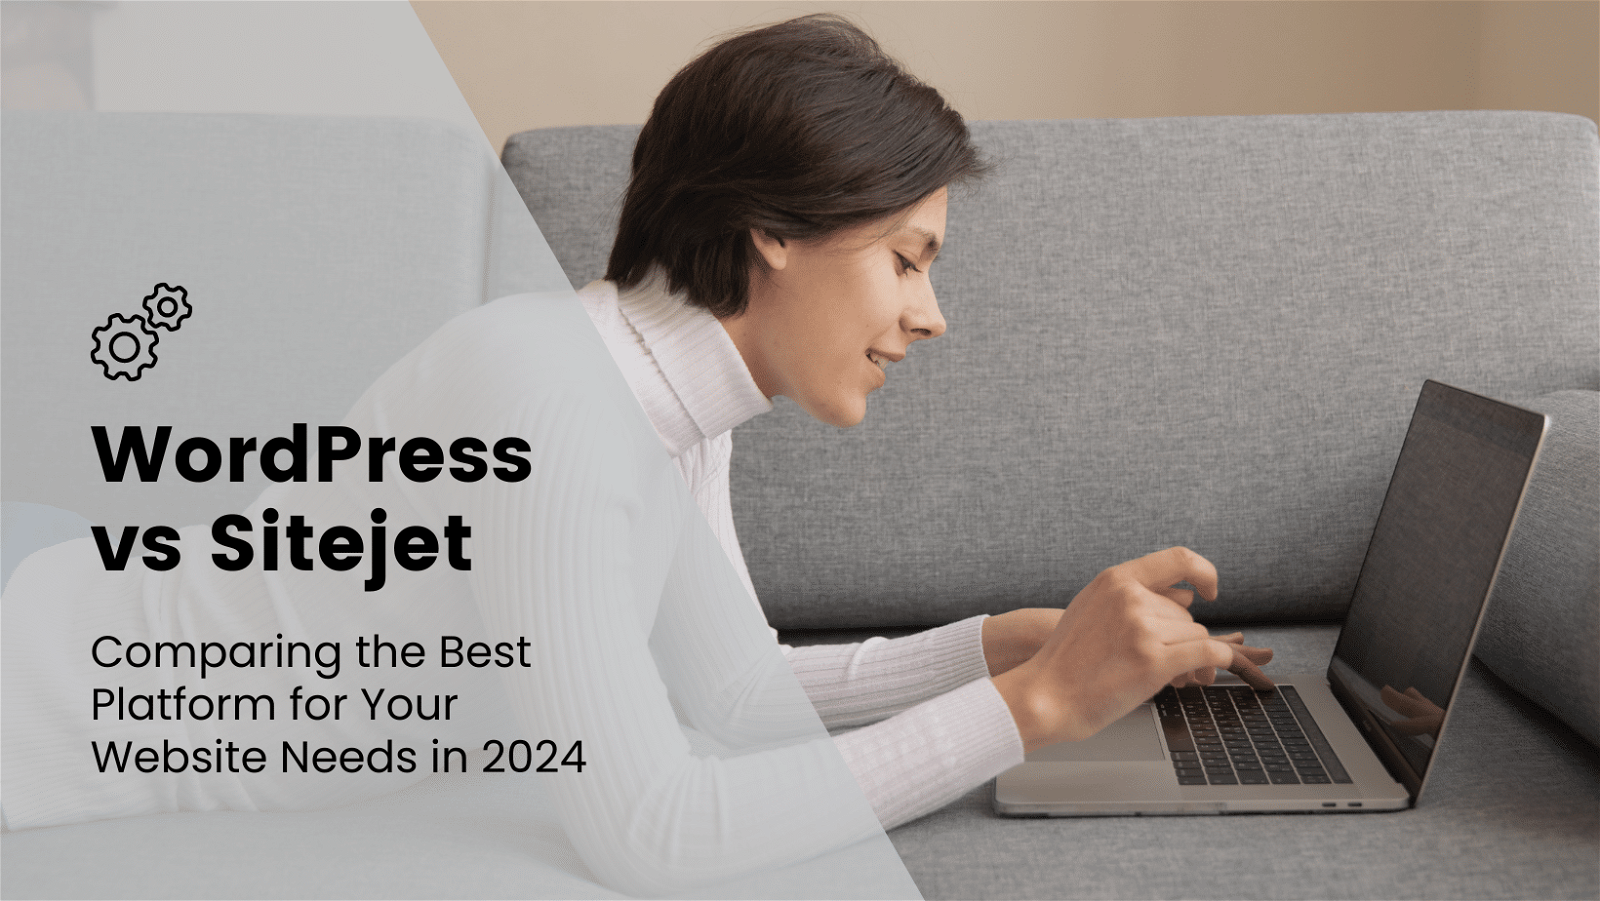 Wordpress vs siejet comparing the best platform for your website needs in 2020.